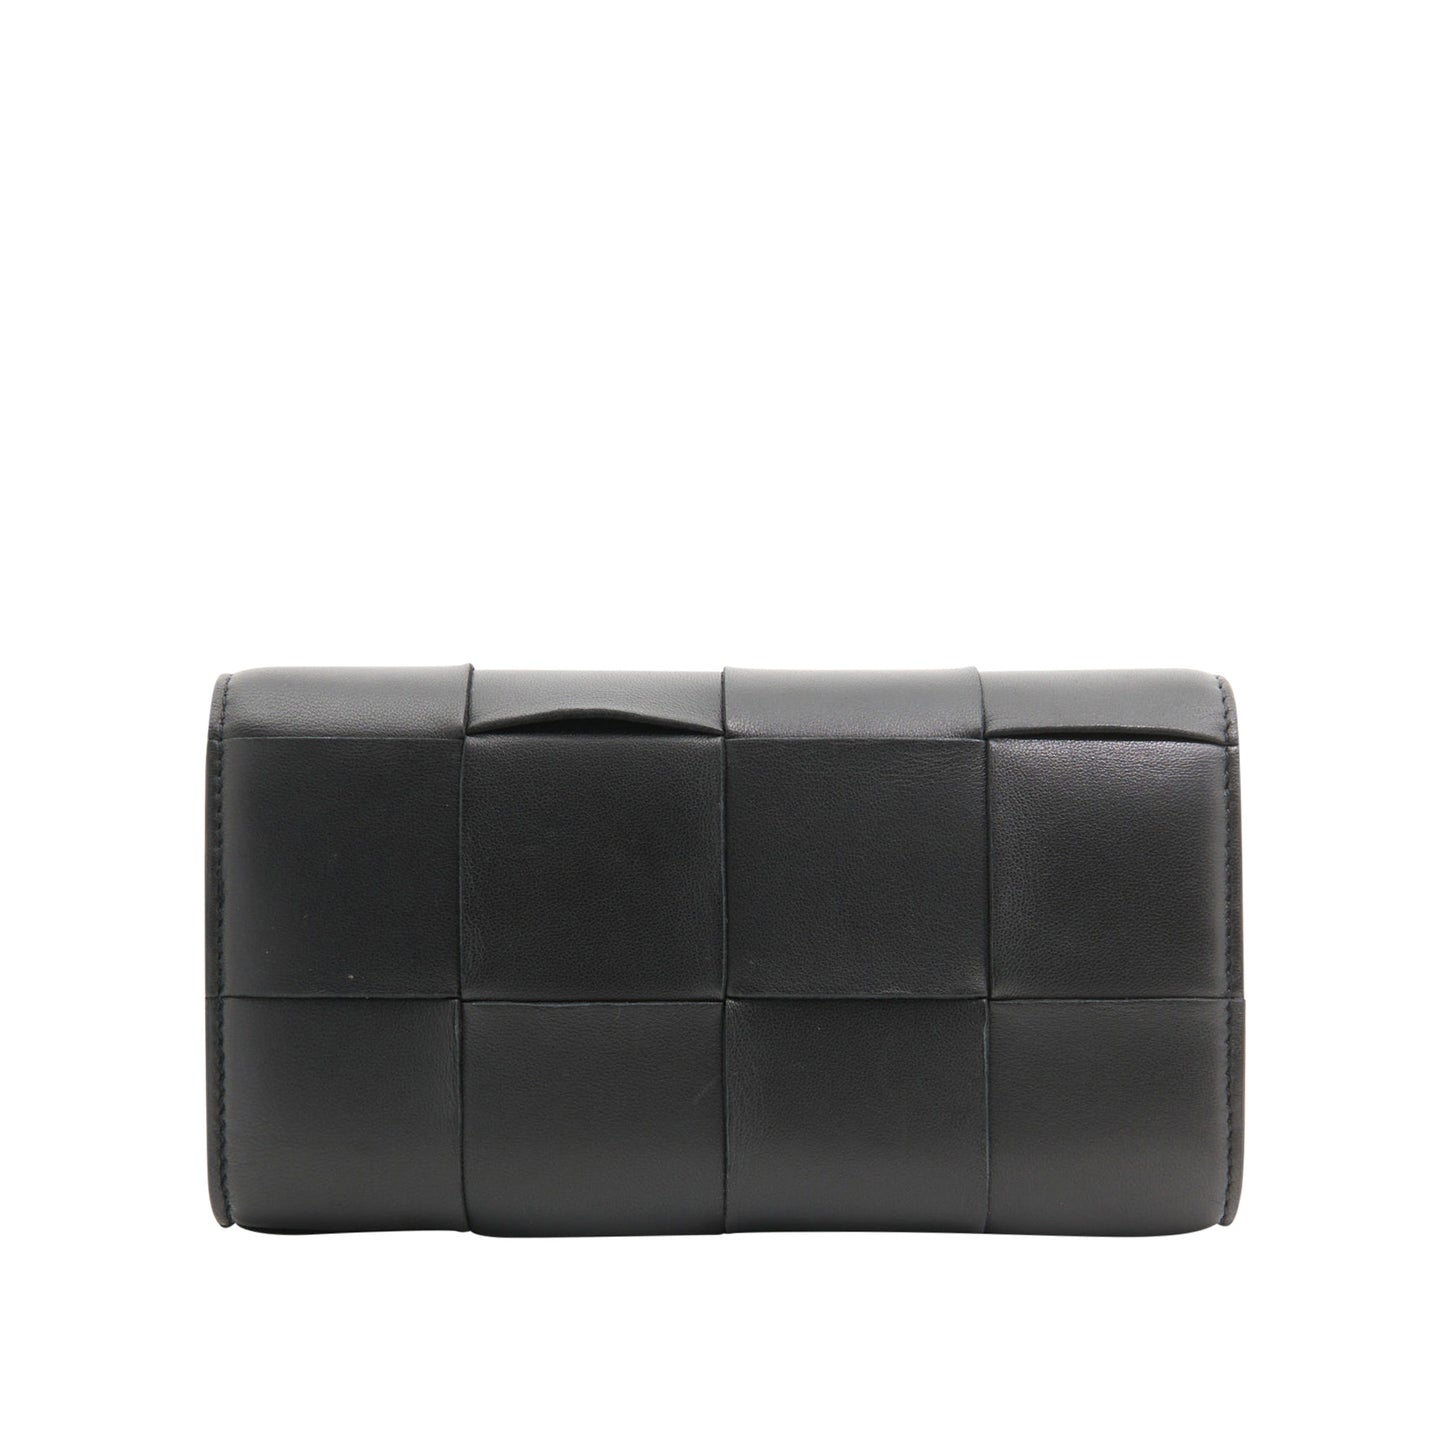 Bottega Veneta Leather Intressio Flap Wallet in Black